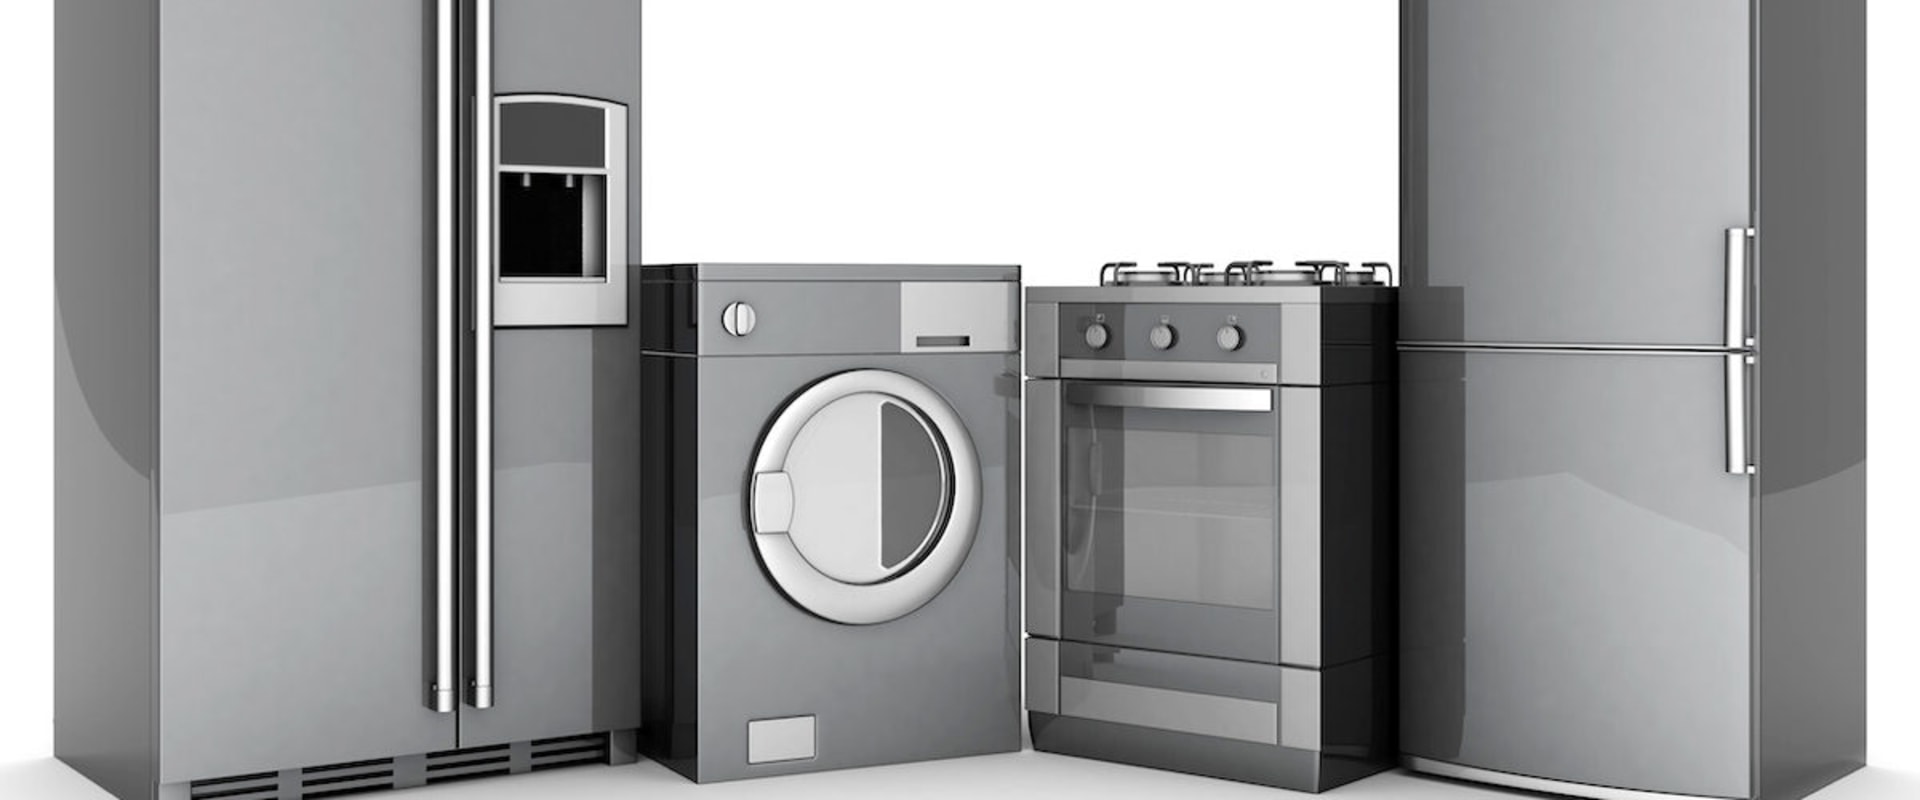 How Long Do Home Appliances Last?